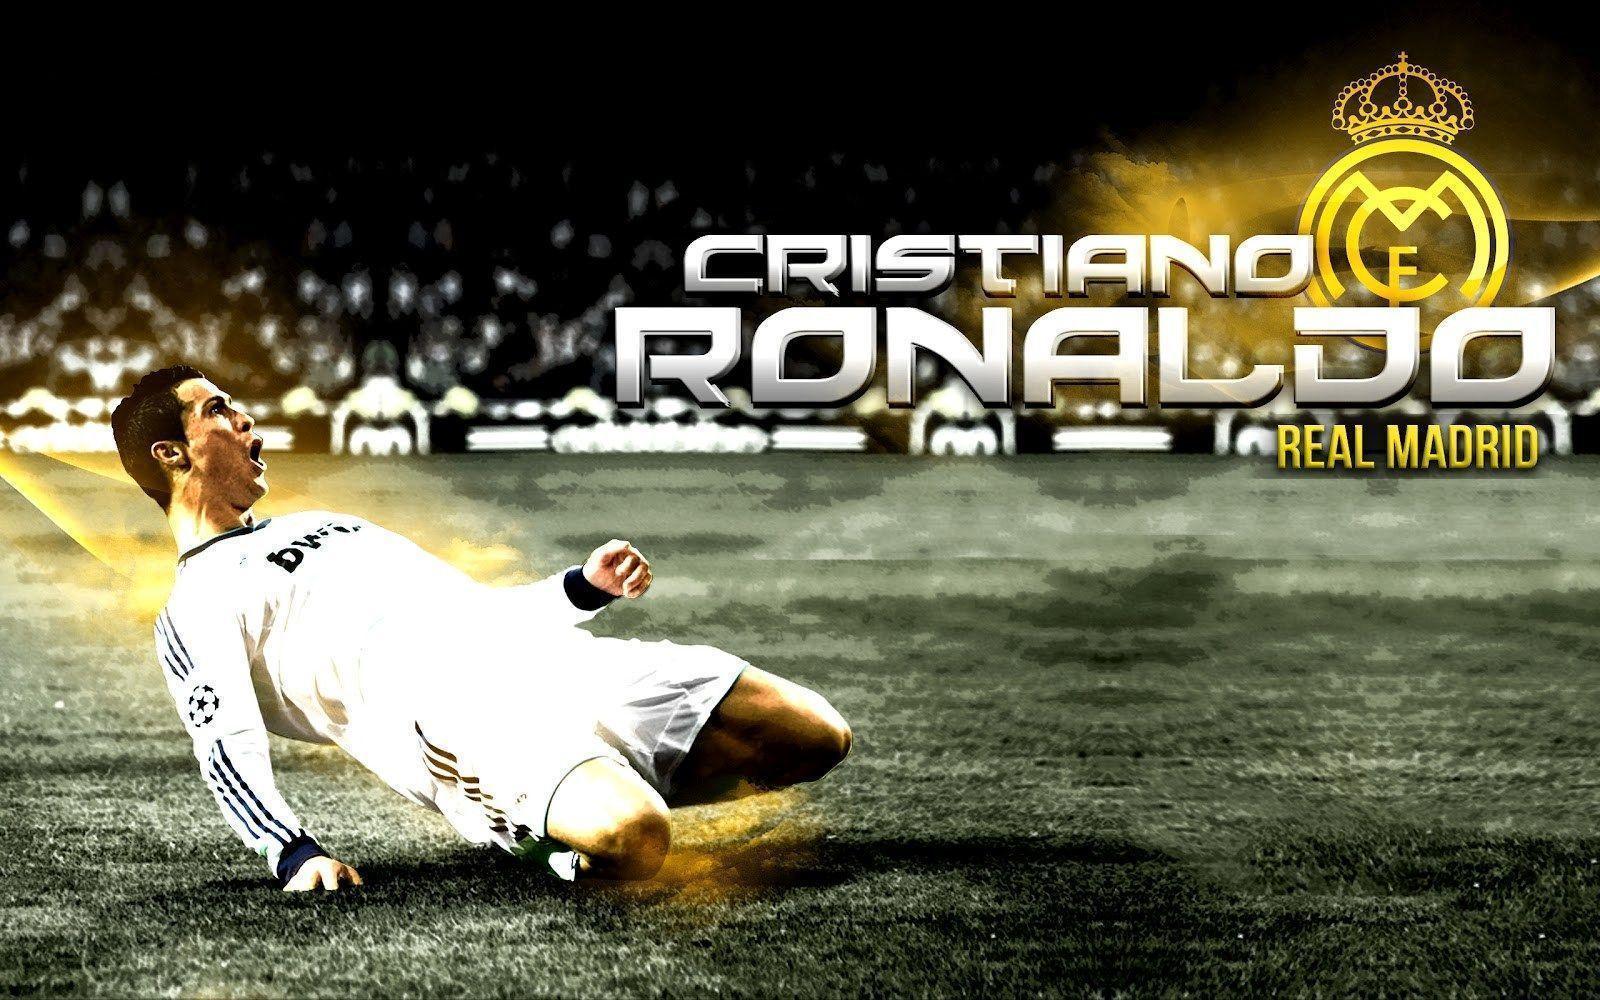 Cristiano Ronaldo Real Madrid Awesome Wallpaper